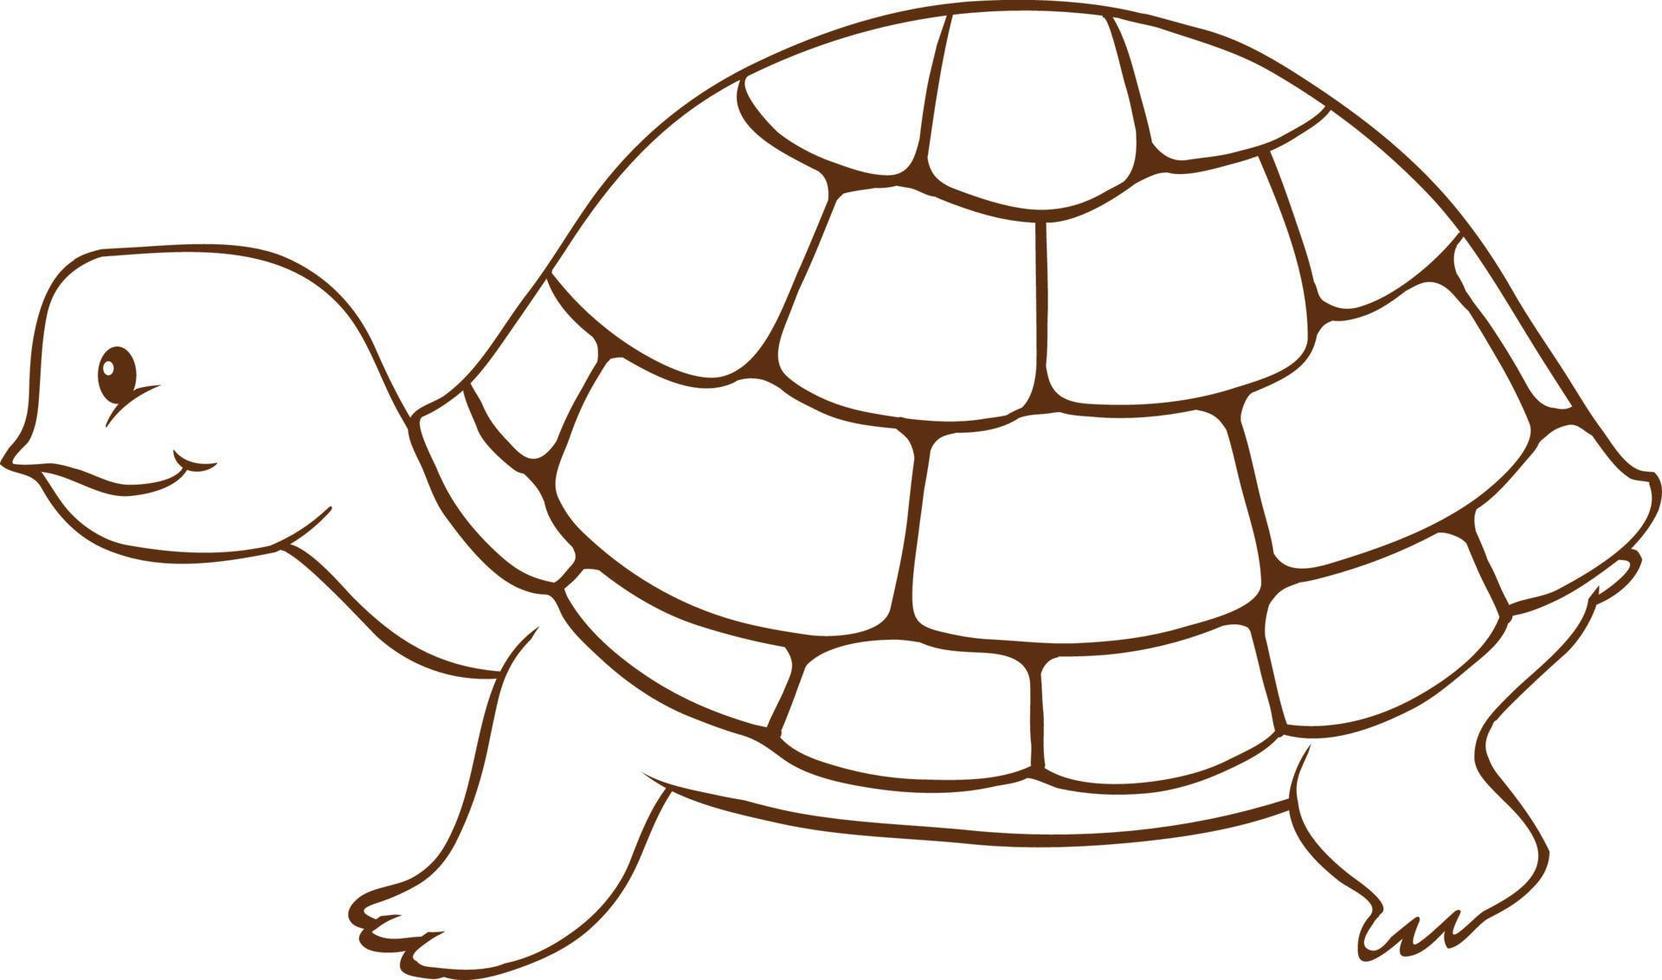 sköldpadda i doodle enkel stil på vit bakgrund vektor